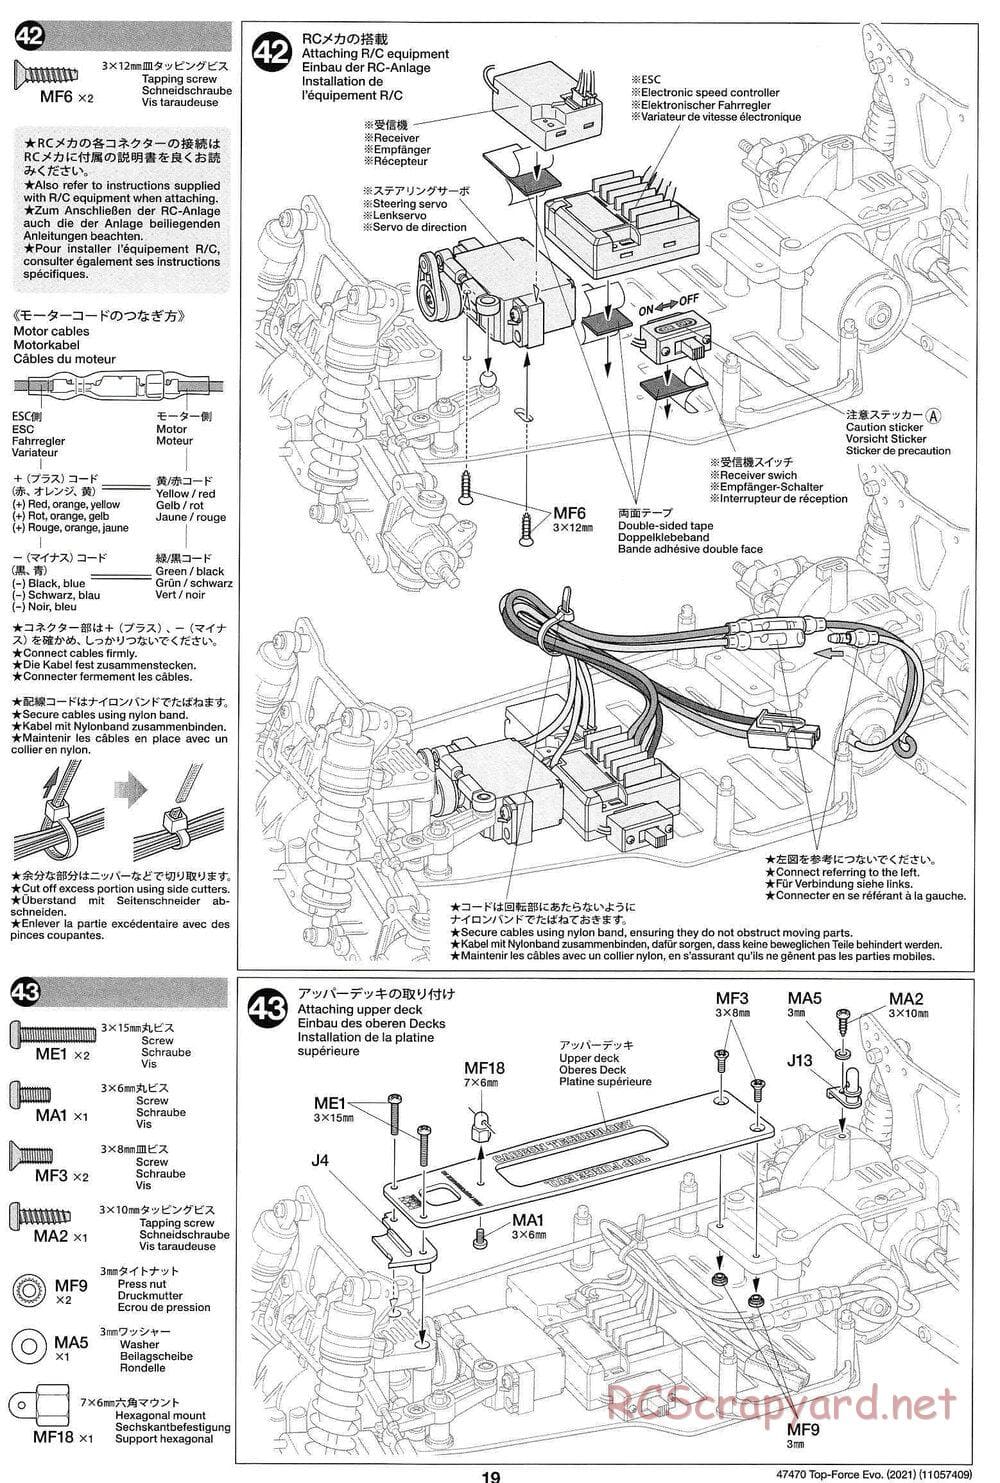 Tamiya - Top Force Evo 2021 - DF-01 Chassis - Manual - Page 19